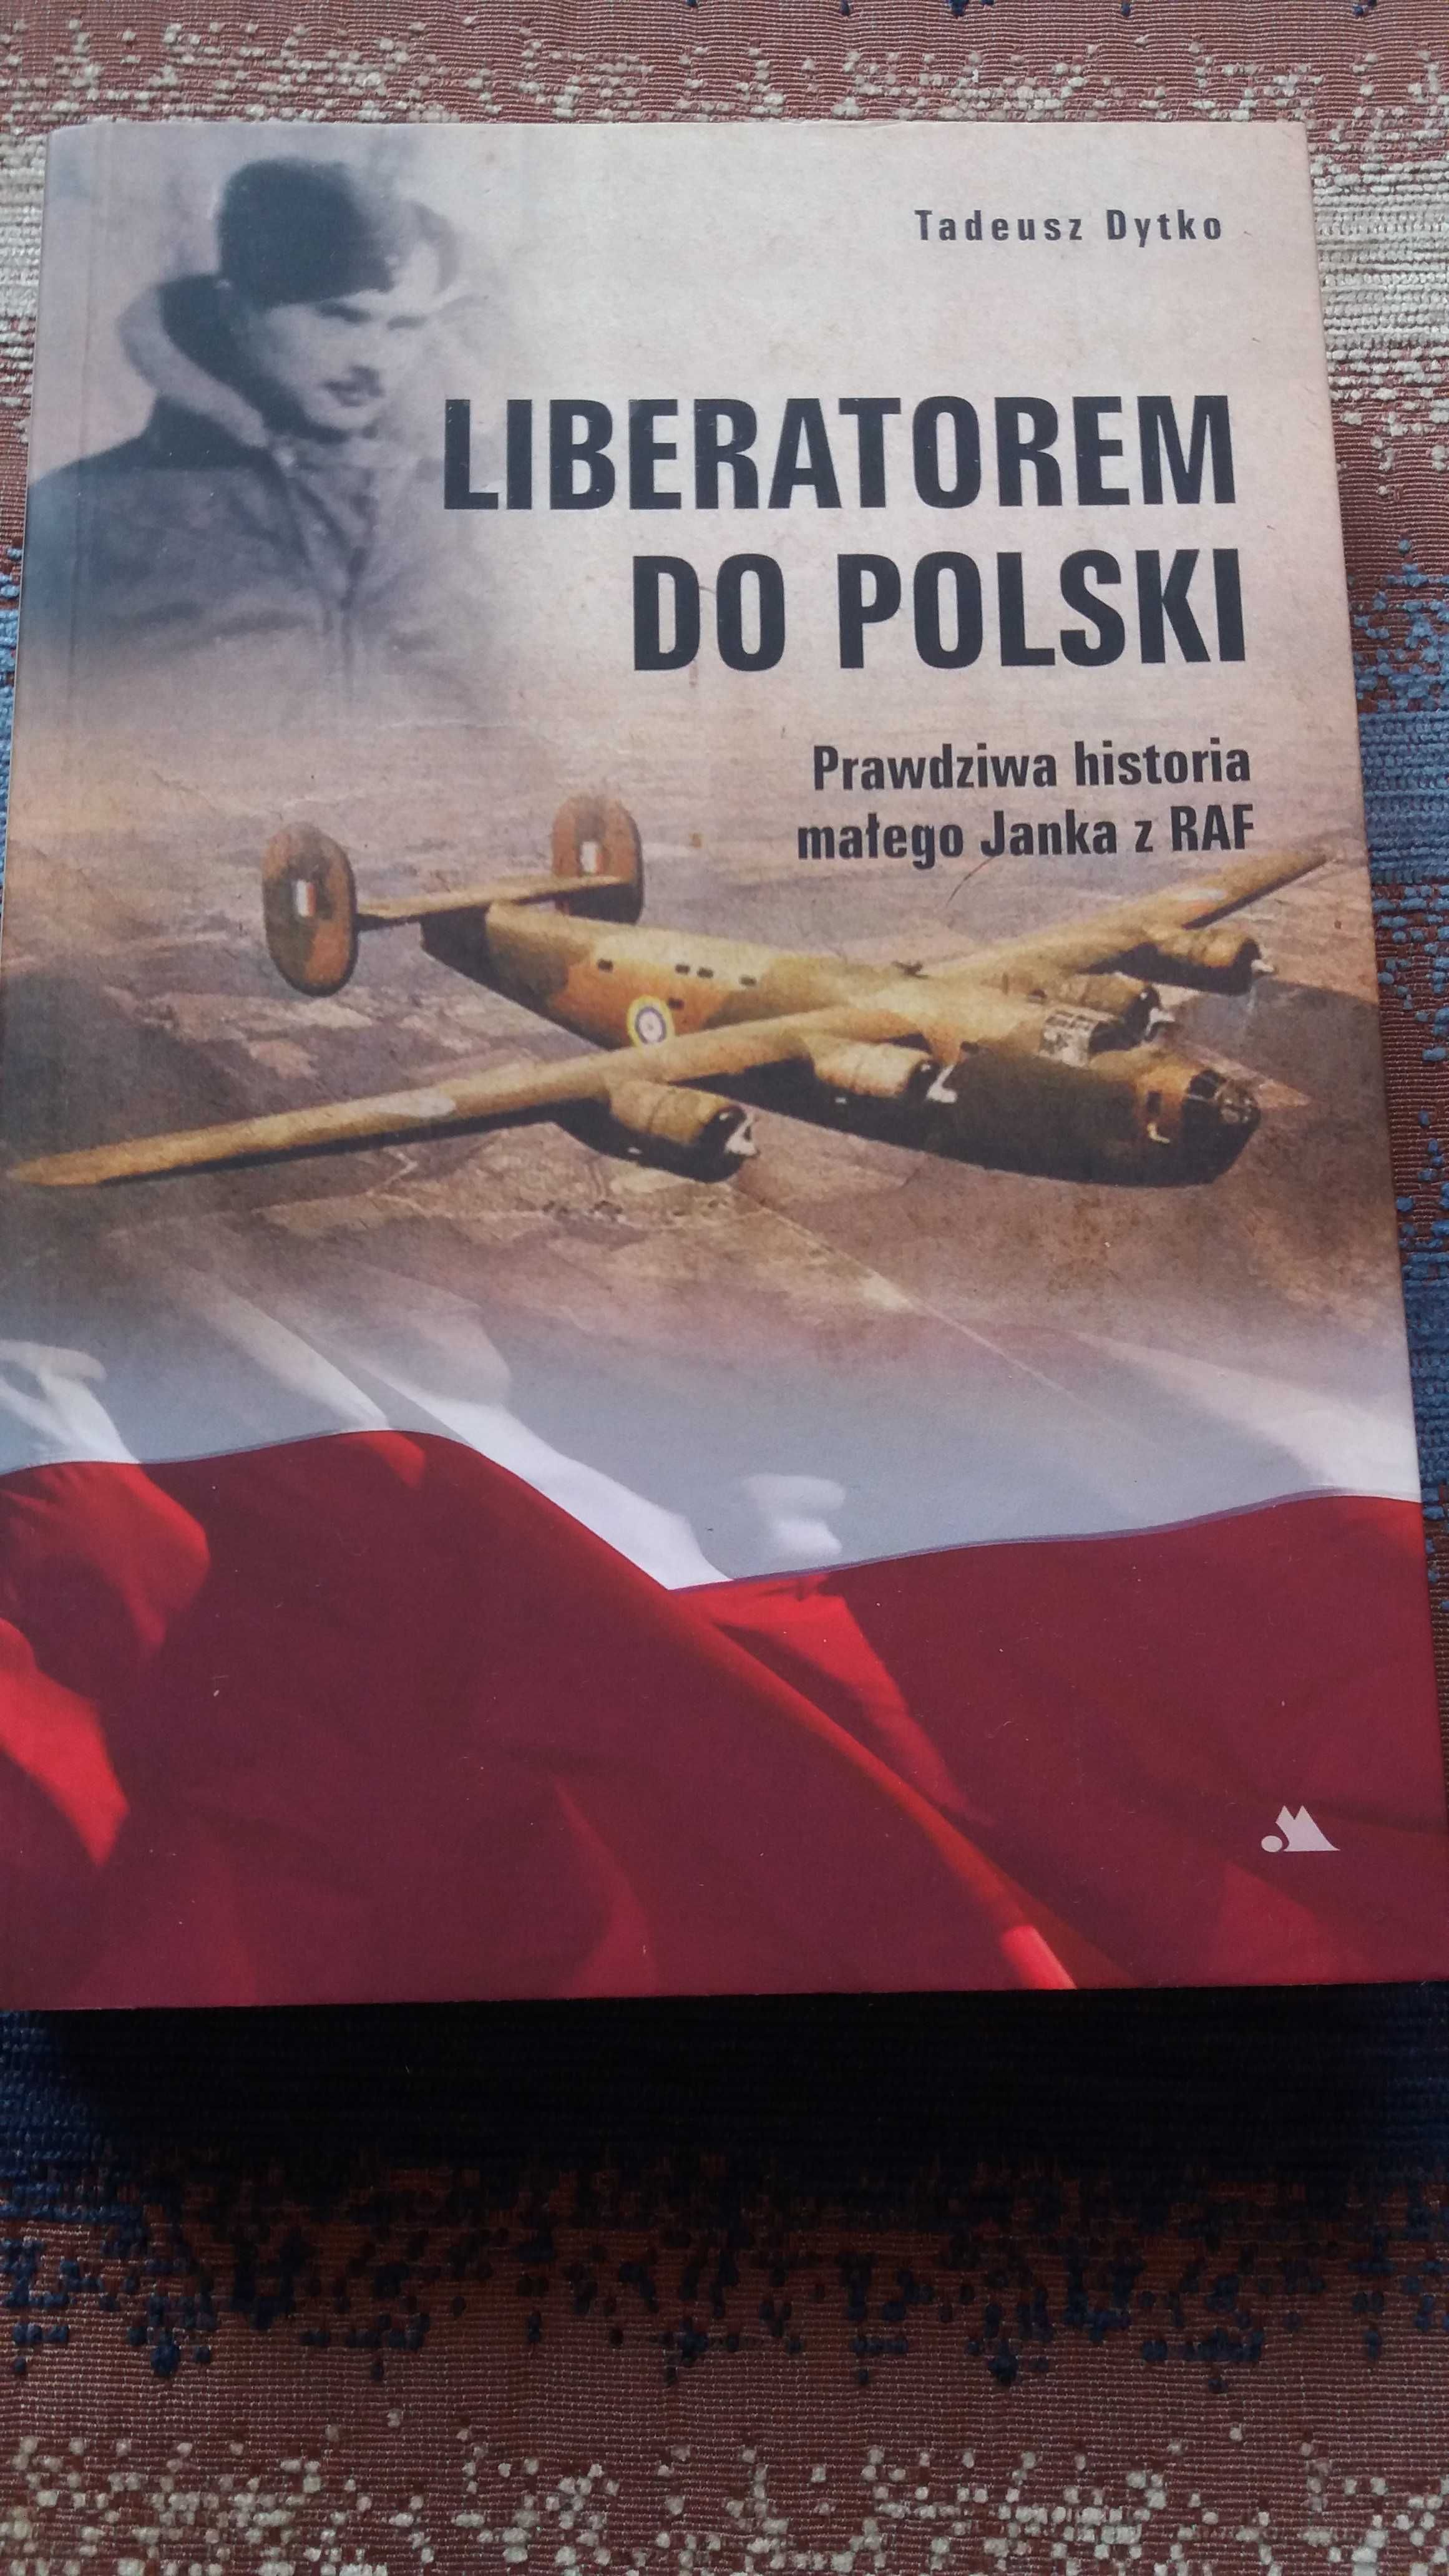 Tadeusz Dytko " Liberatorem Do Polski "